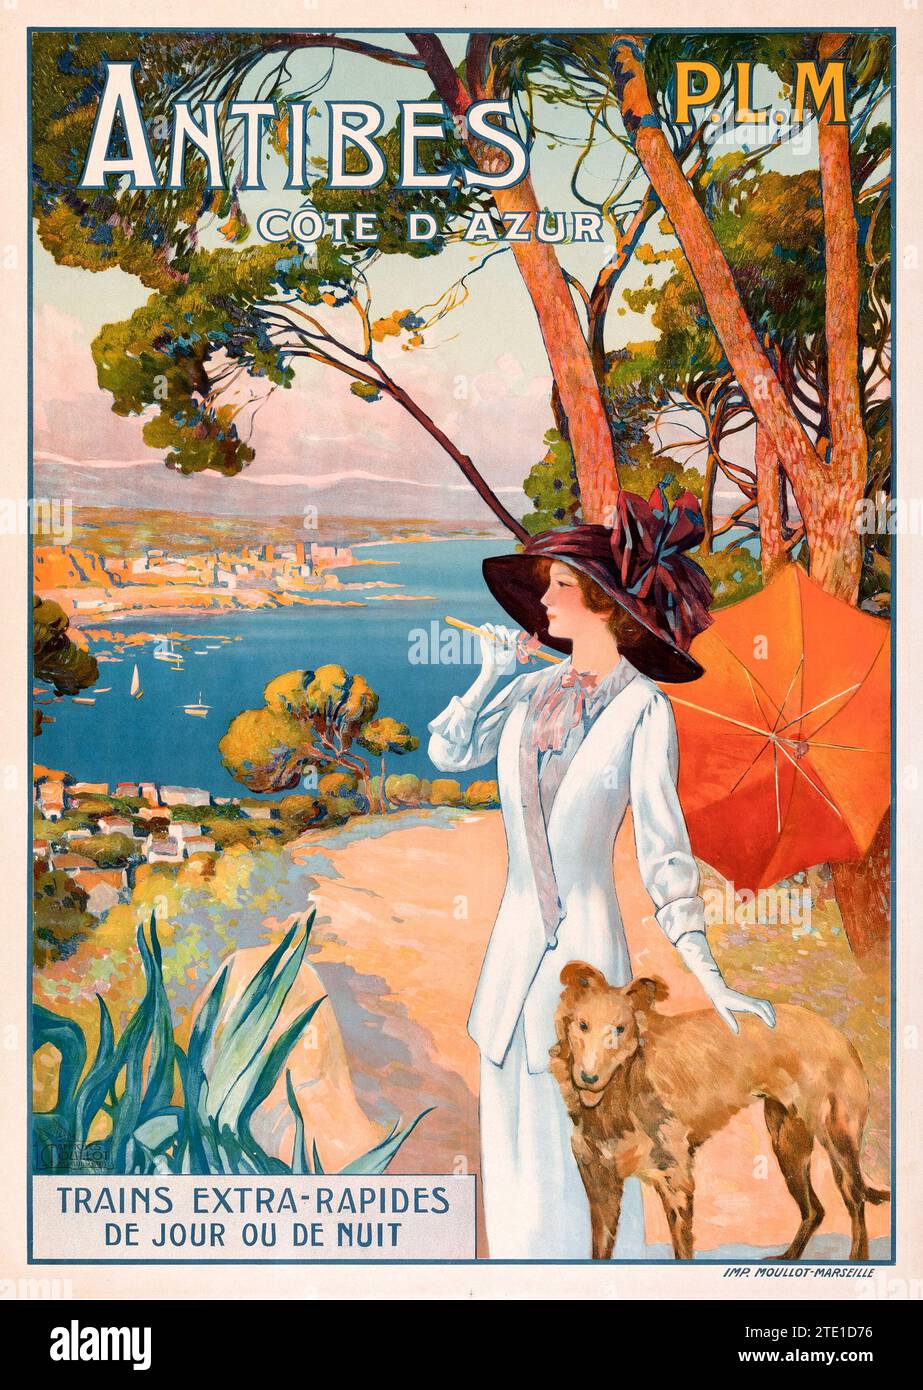 Antibes Cote d'Azur - The French Riviera - (P.L.M., c. 1910) French Travel Poster - David Dellepiane Artwork. Stock Photo